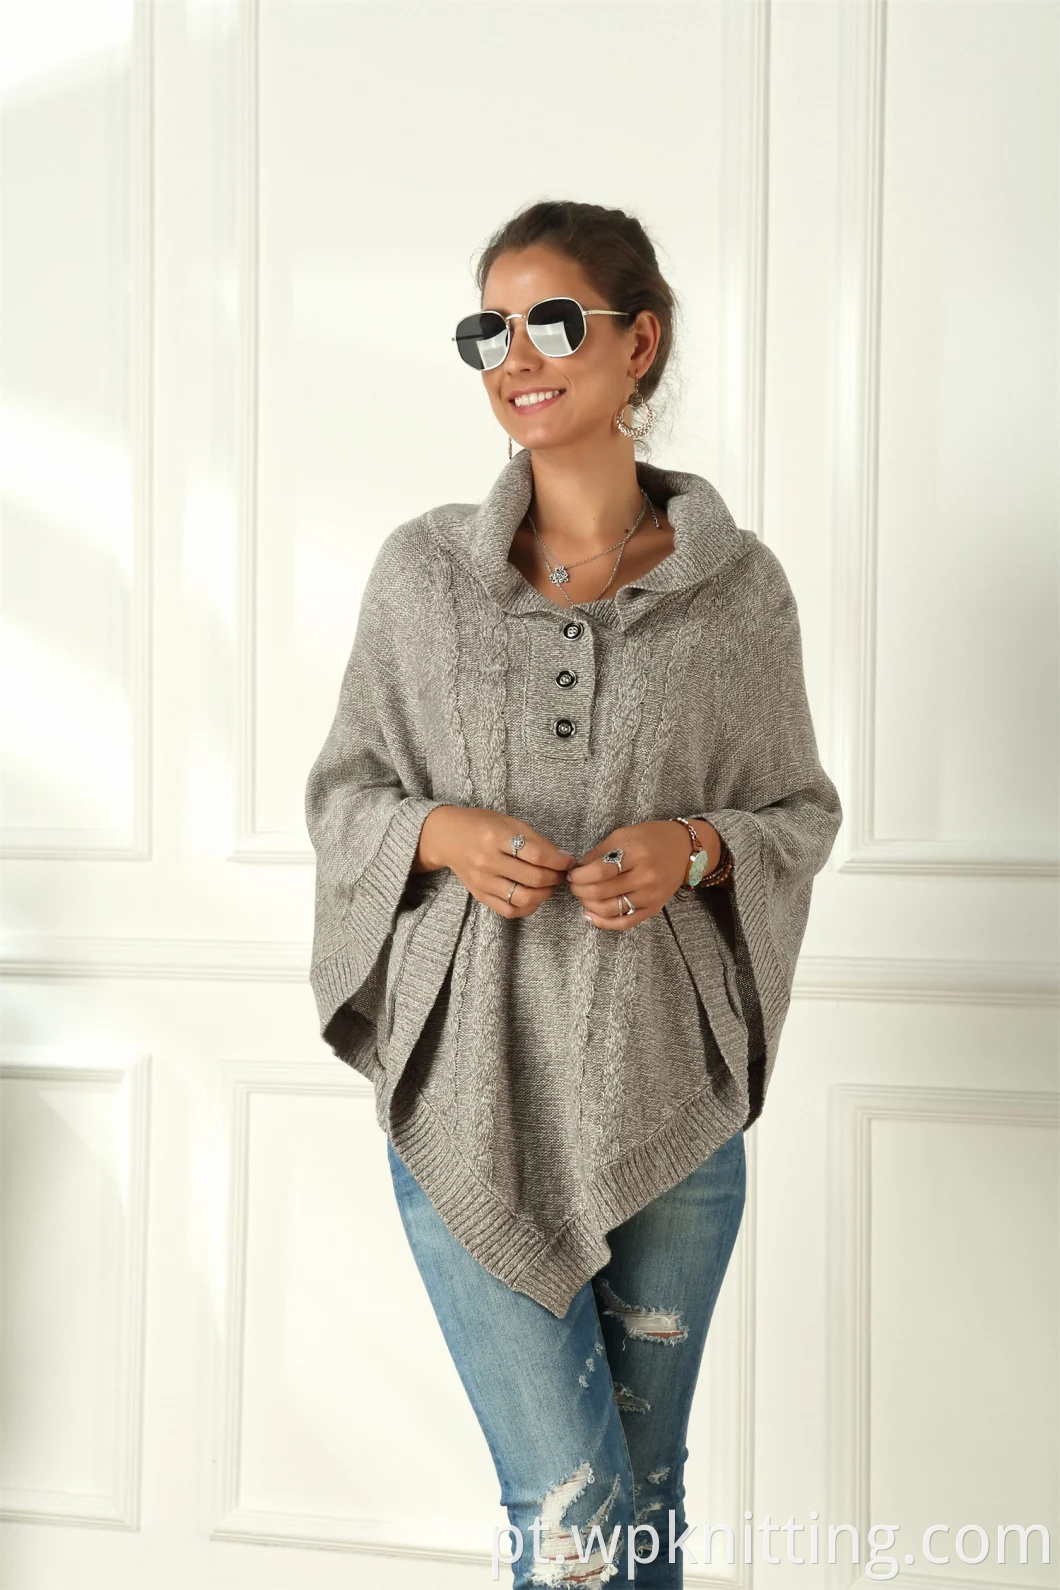 Manto de xale de tamanho grande casaco irregular de suéter solto mulheres malhas